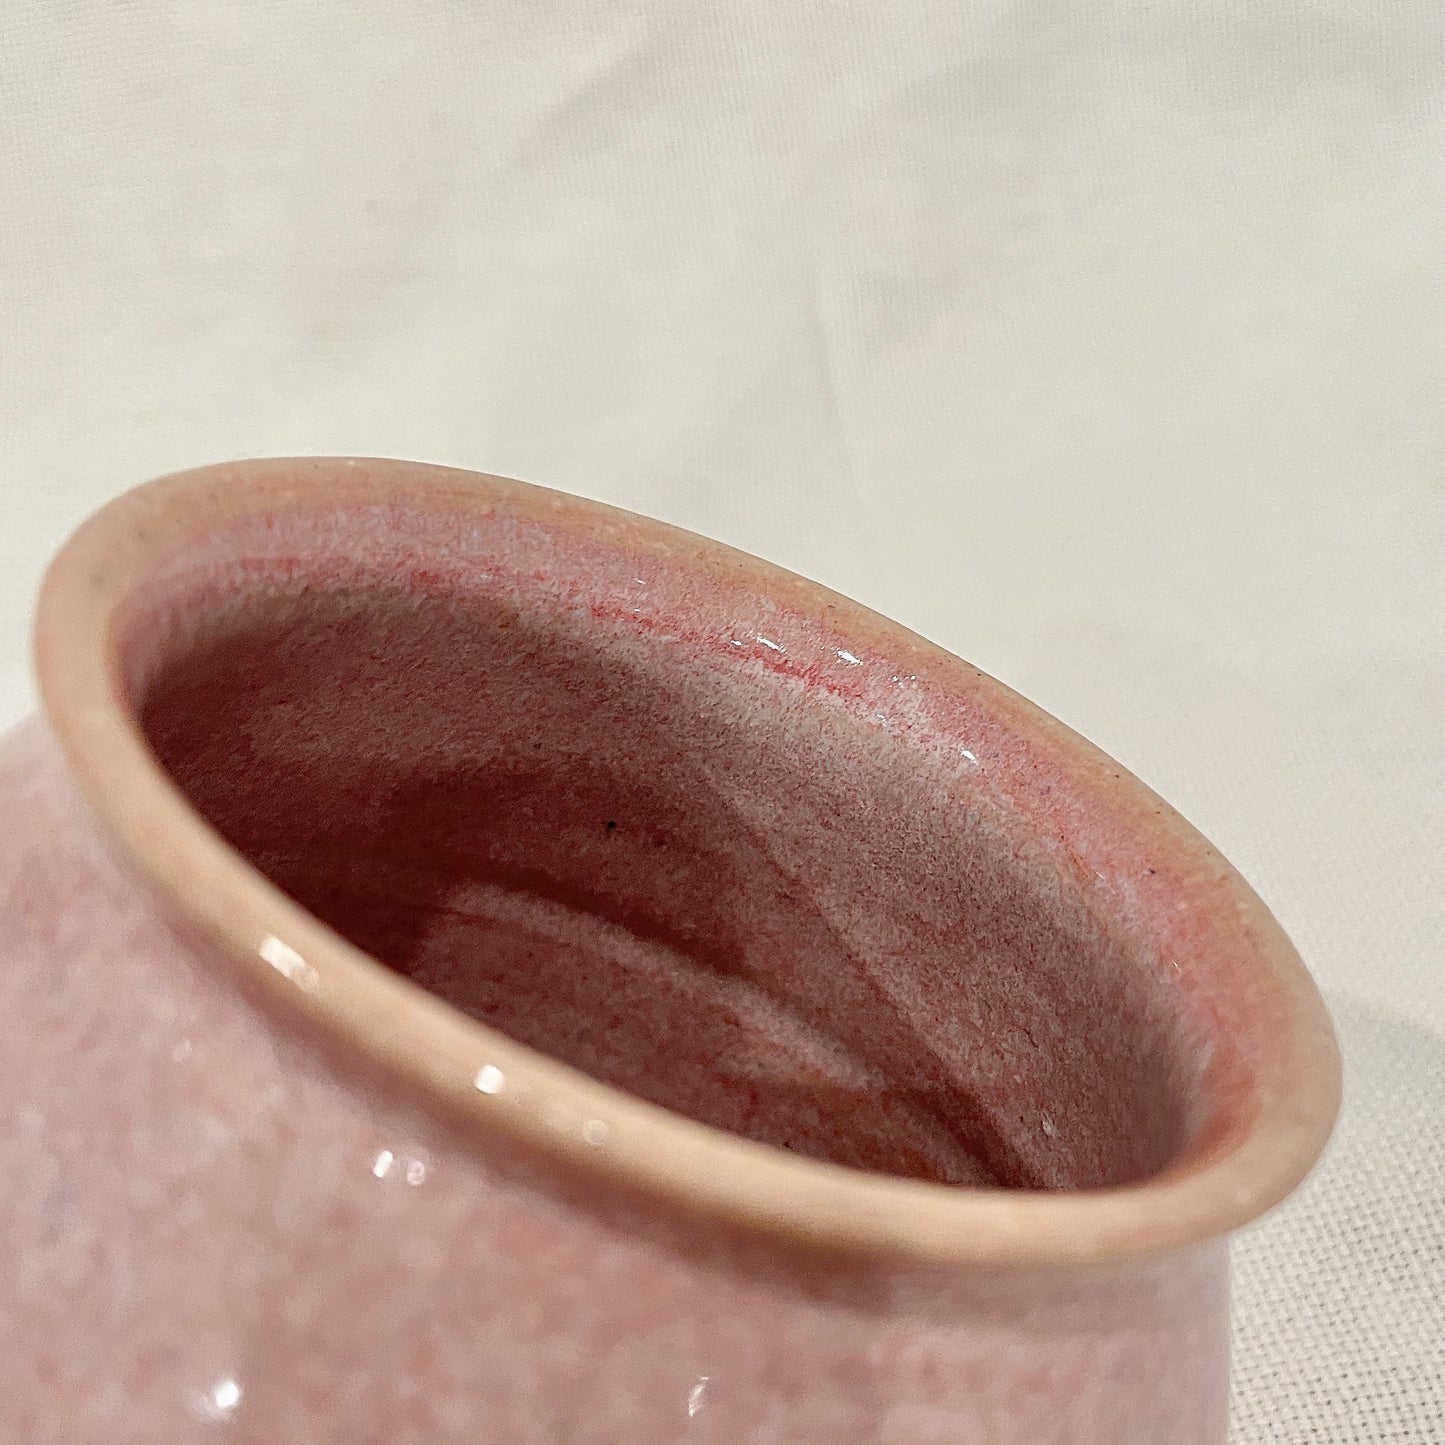 Pink Vase 5